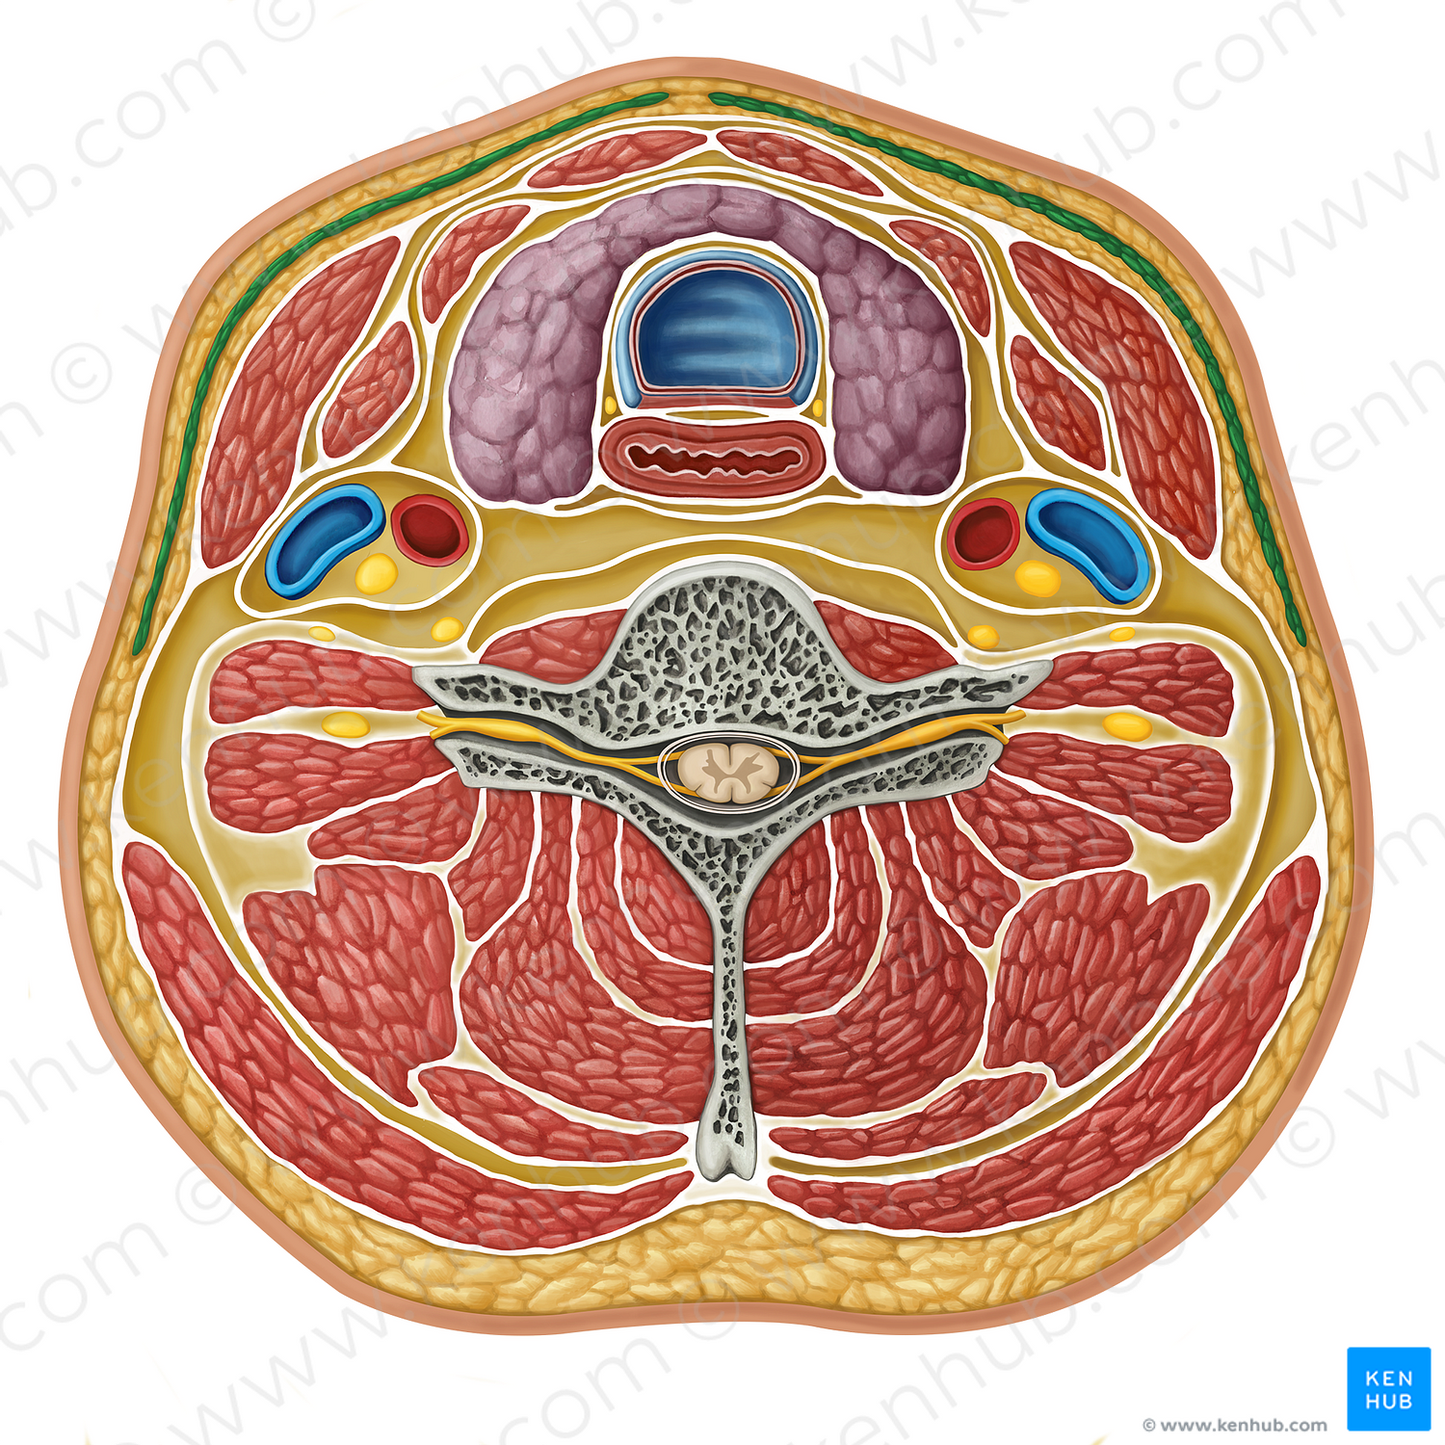 Platysma muscle (#17304)